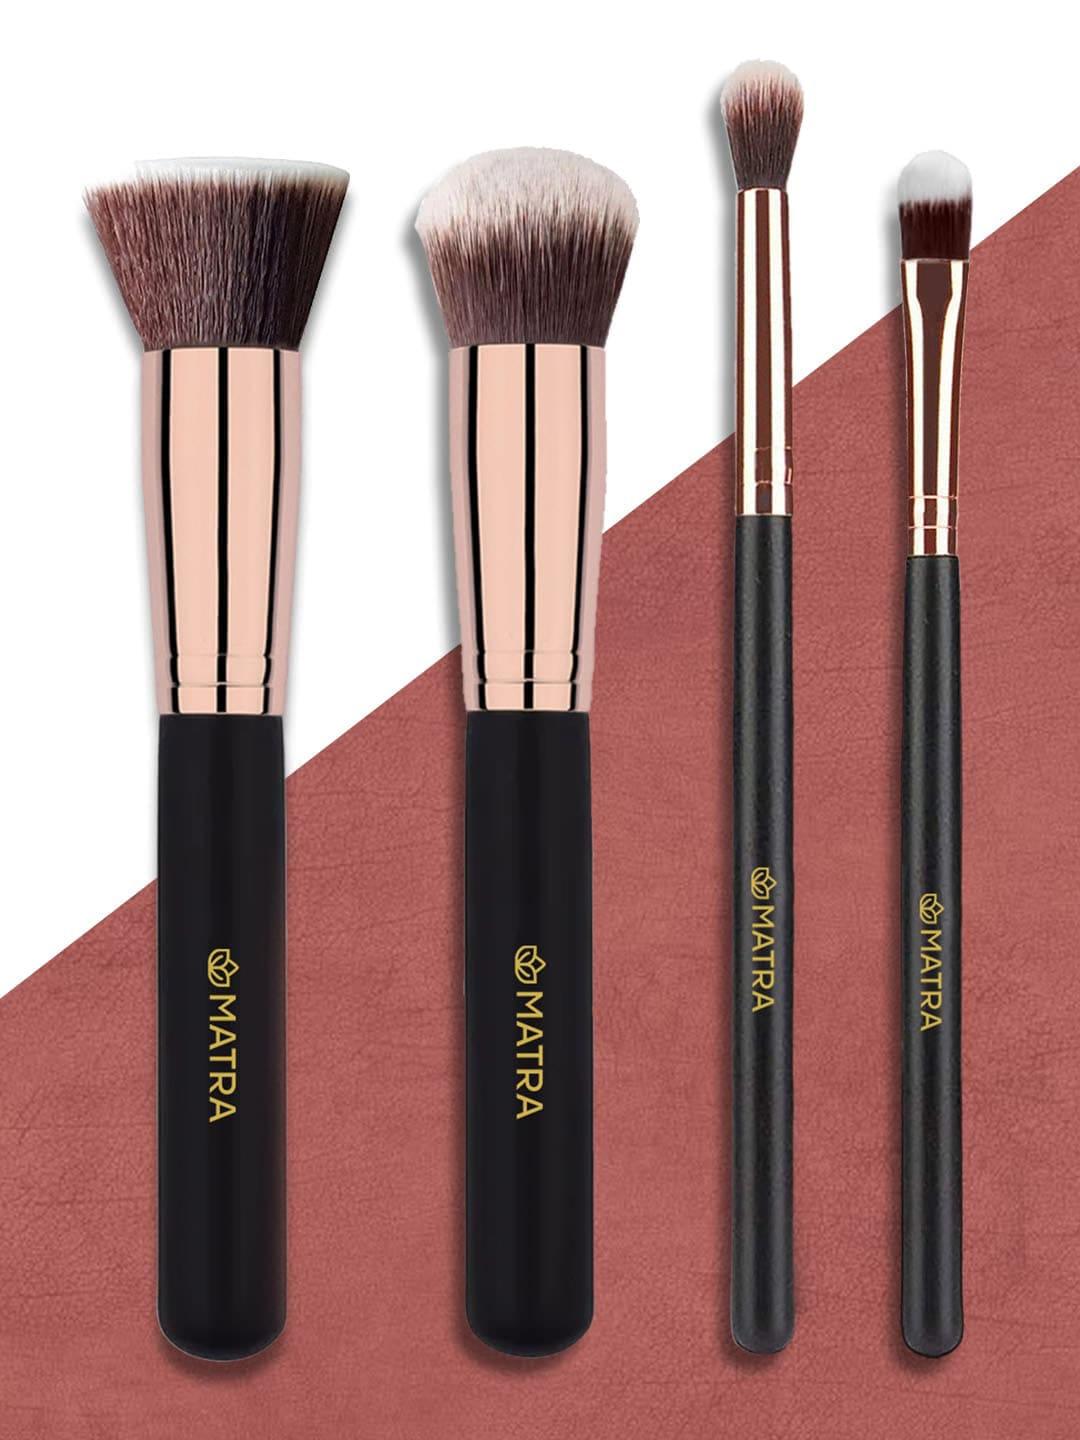 matra set of 4 beginner makeup brushes